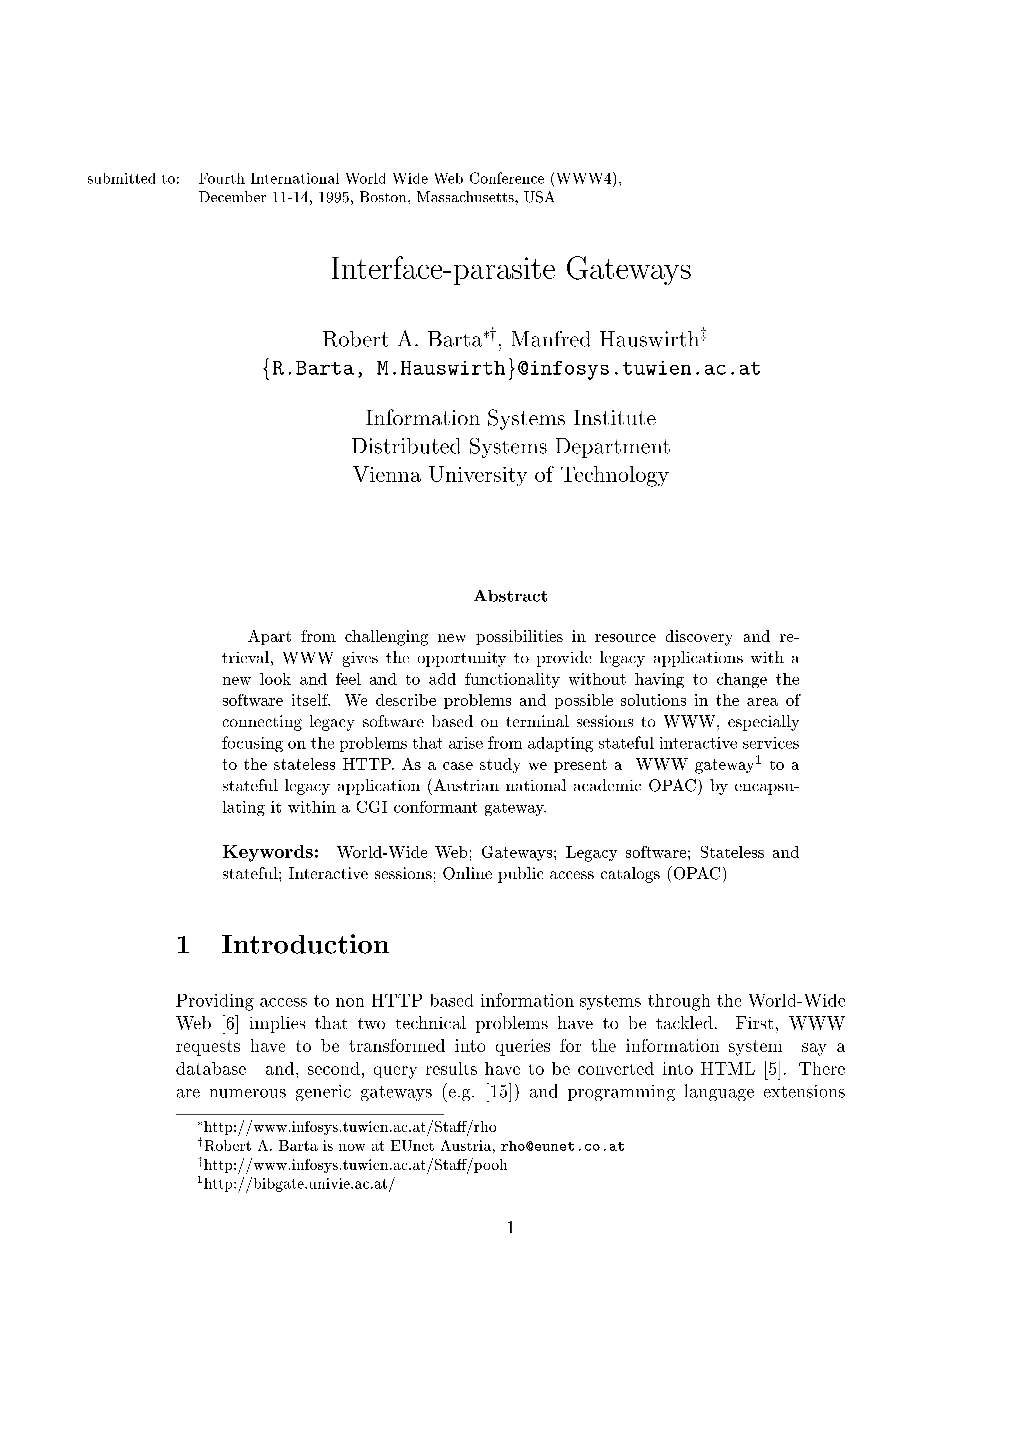 Interface-Parasite Gateways 1 Introduction